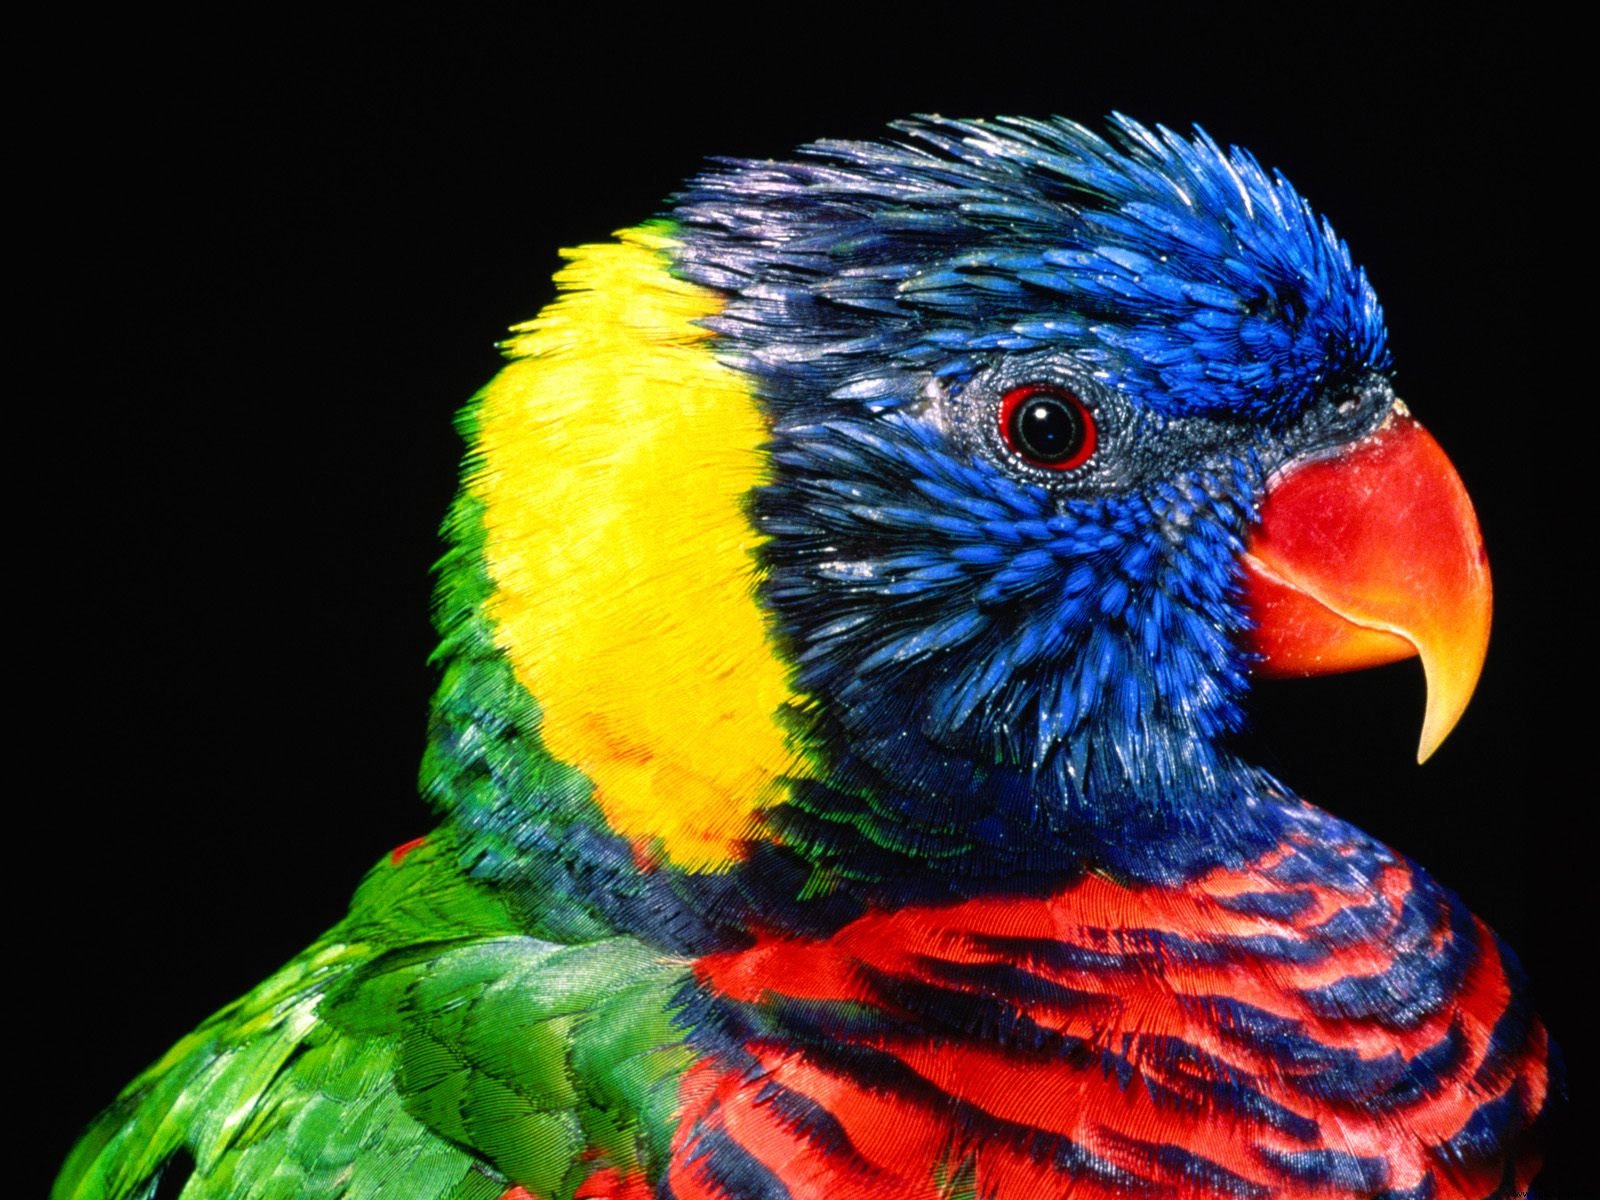 https://blogger.googleusercontent.com/img/b/R29vZ2xl/AVvXsEjkZDBnSzCJiVYEzbOw01IAh-lbZb2SdPx_QJgNquZ832GmCralNwe0tltW7qSGclxORInNn6GpBaGojLx59oAf5a8Y6I8zG1dWK7RCtX4cS62WWol5Sujx7VZZYY9bnpH4SJWAACUy_yM/s1600/best-birds-wallpapers.jpg